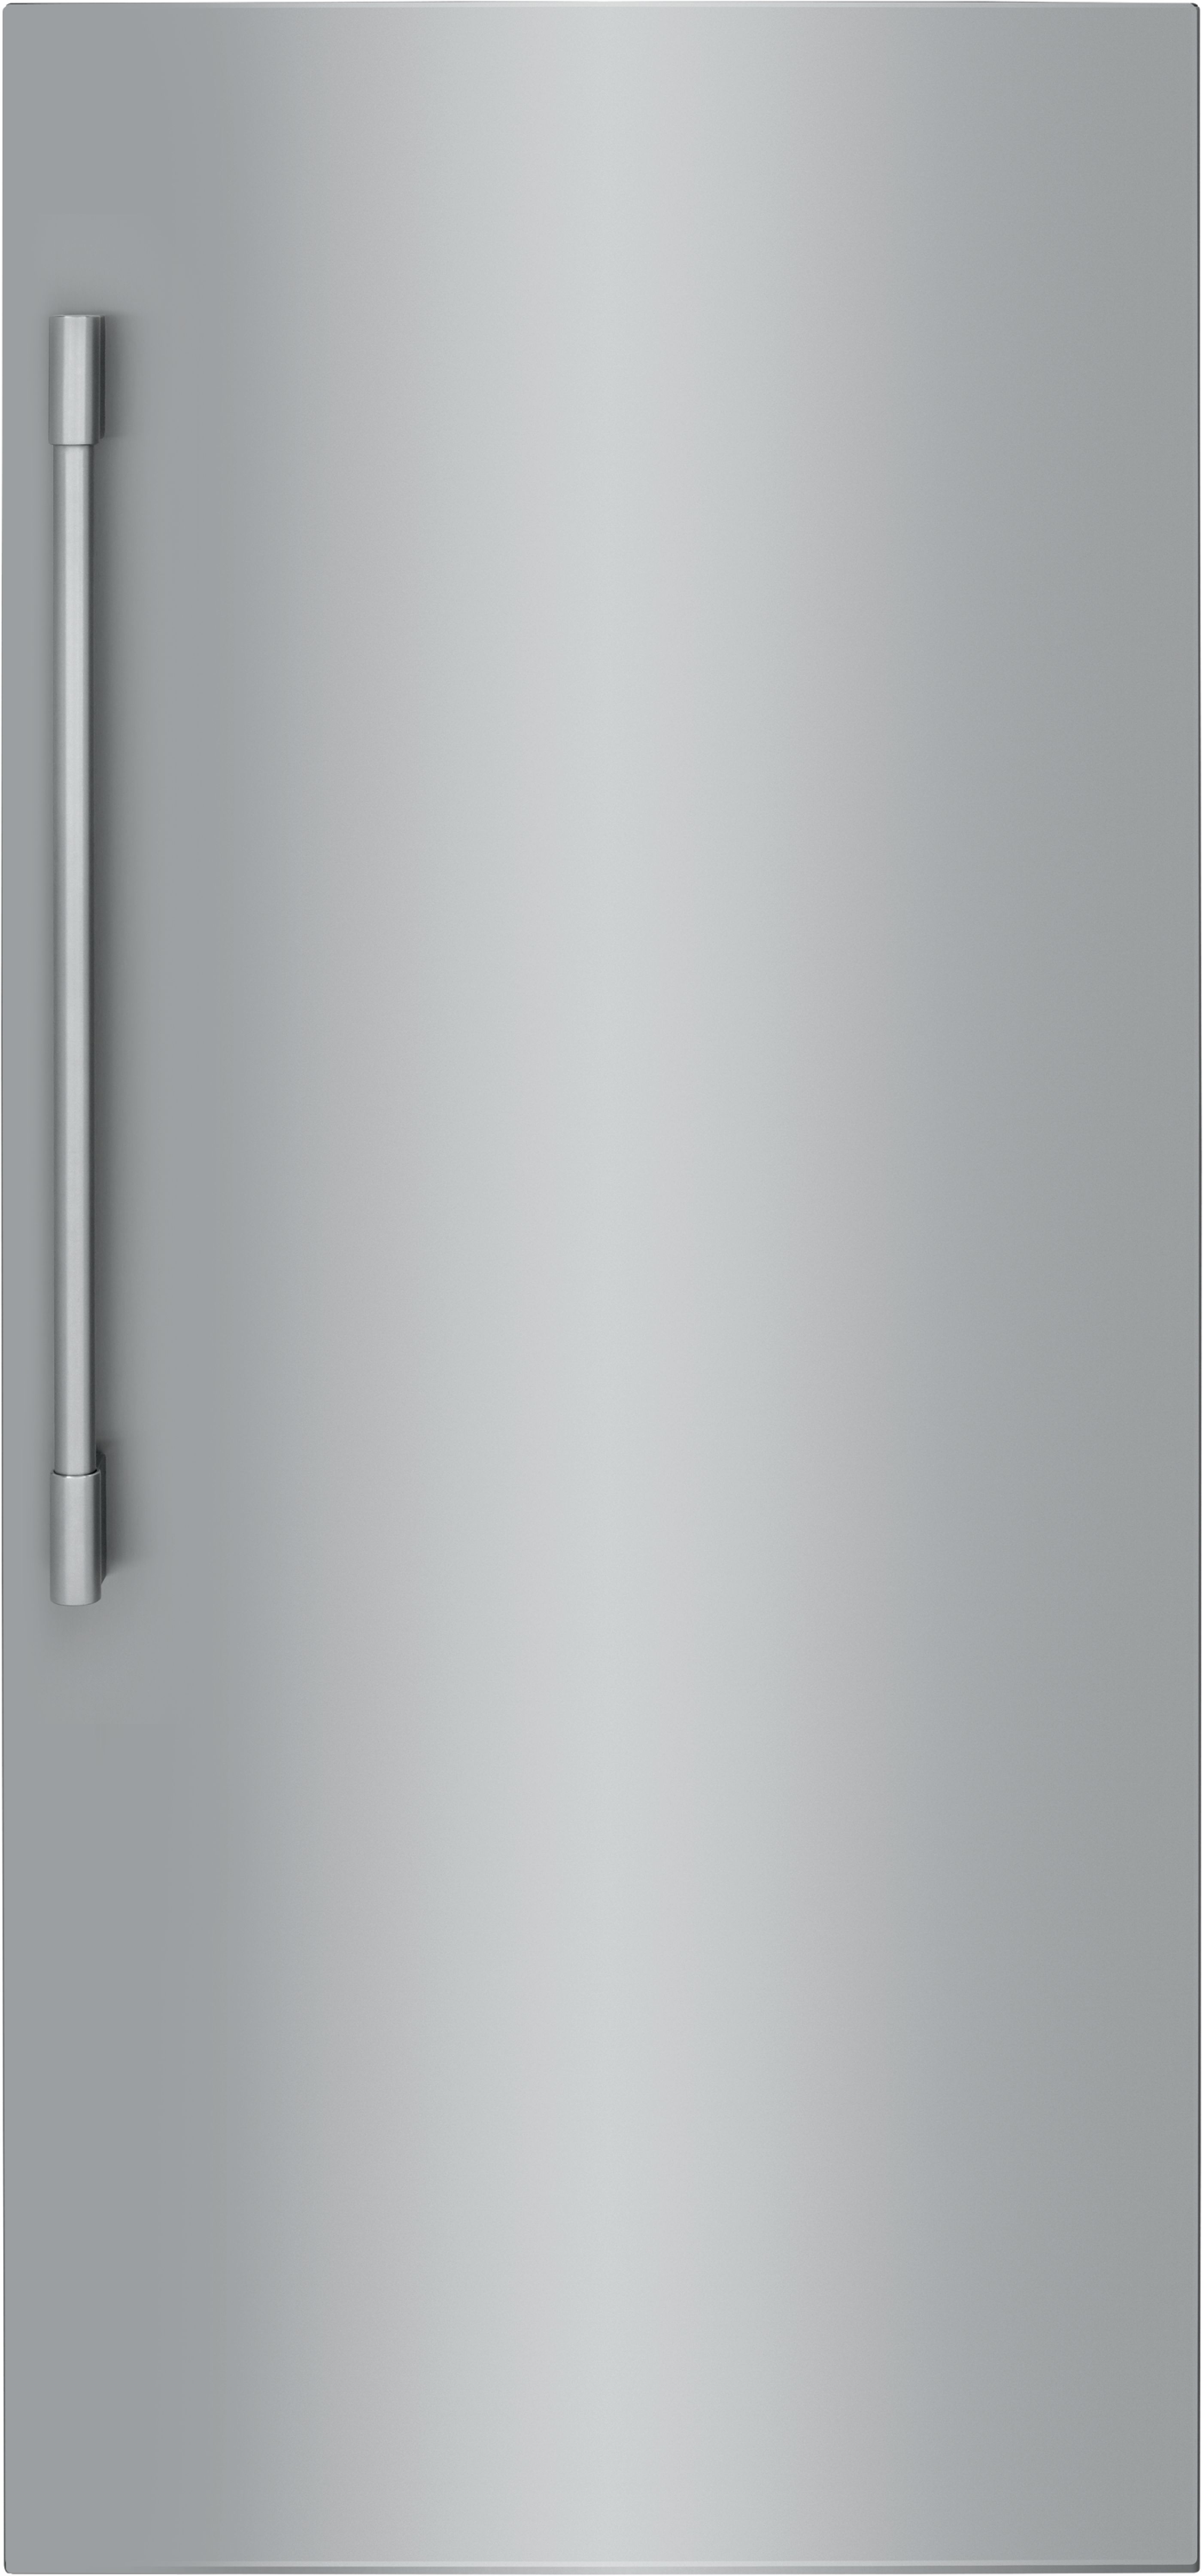 samsung refrigerator temp controls